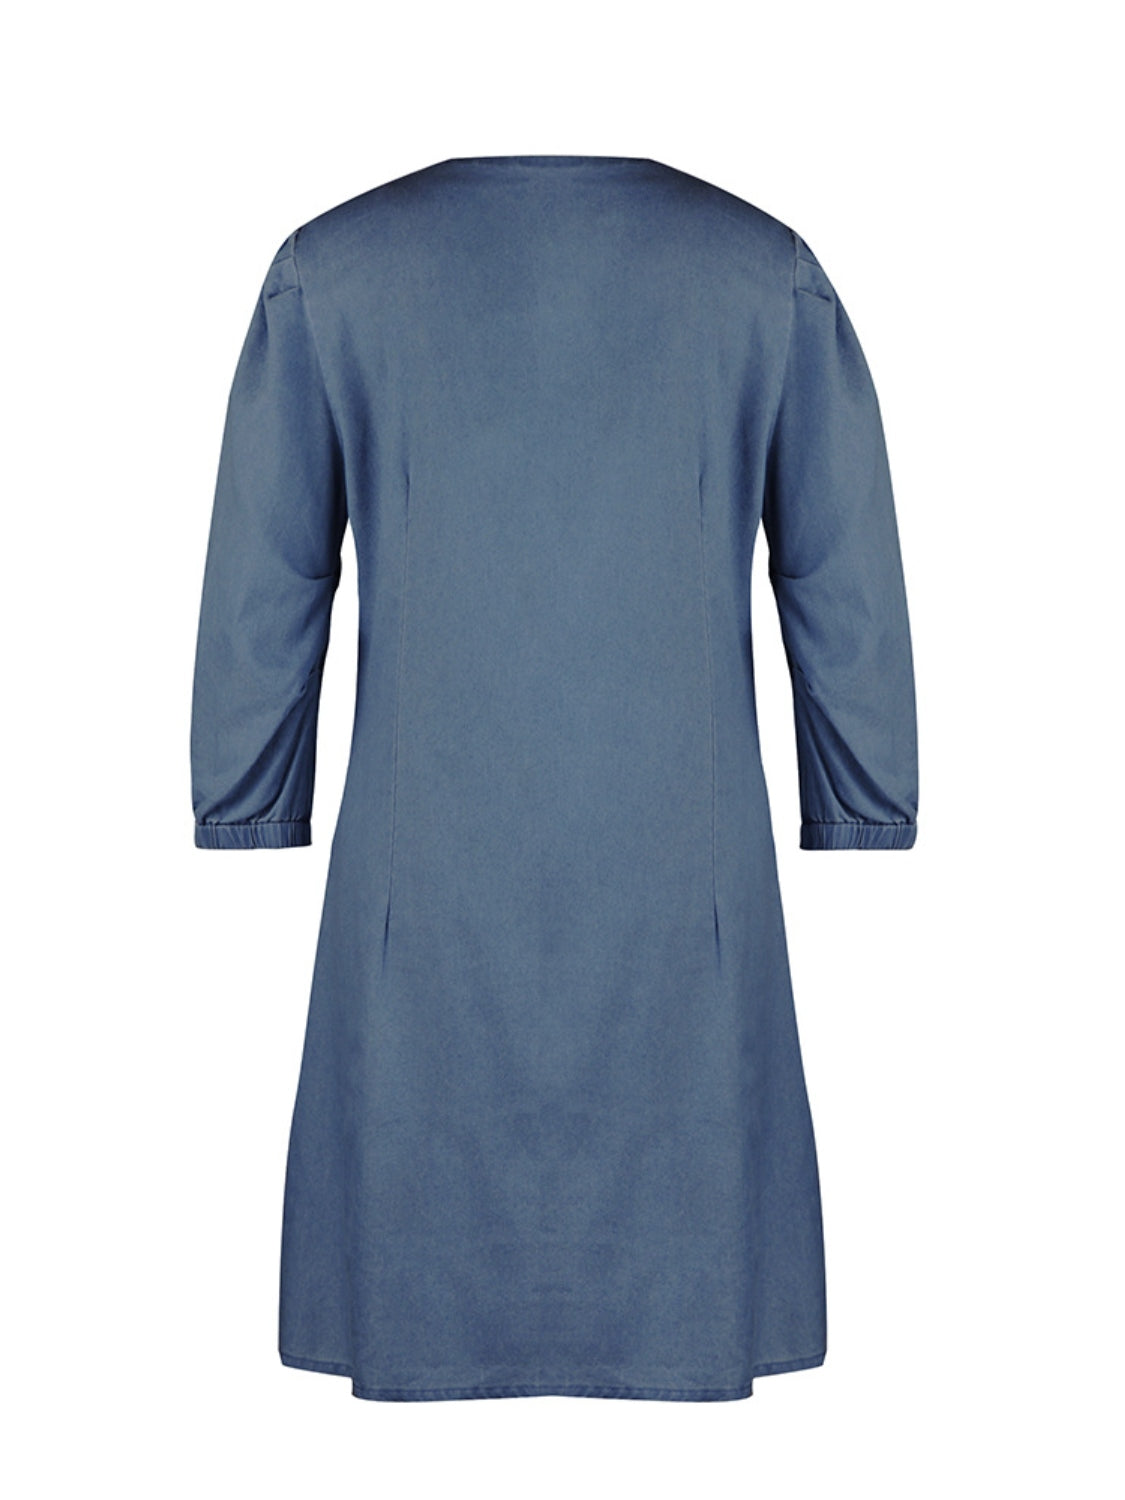 Full Size V-Neck Half Sleeve Denim Dress BLUE ZONE PLANET